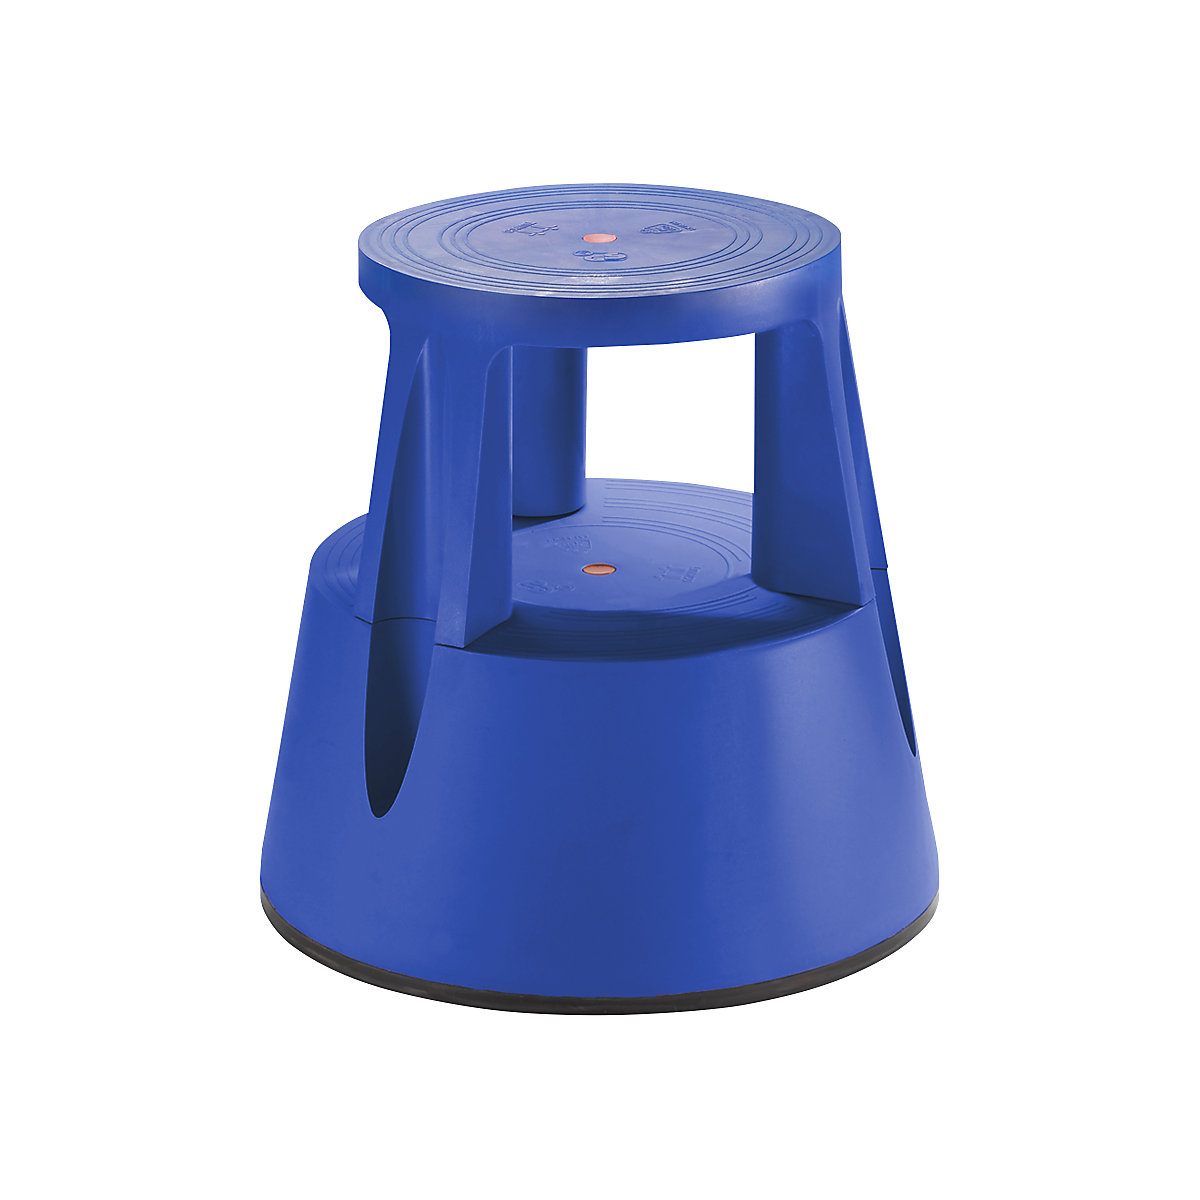 Kick stool made of shatterproof plastic – Twinco, max. load 150 kg, blue-3